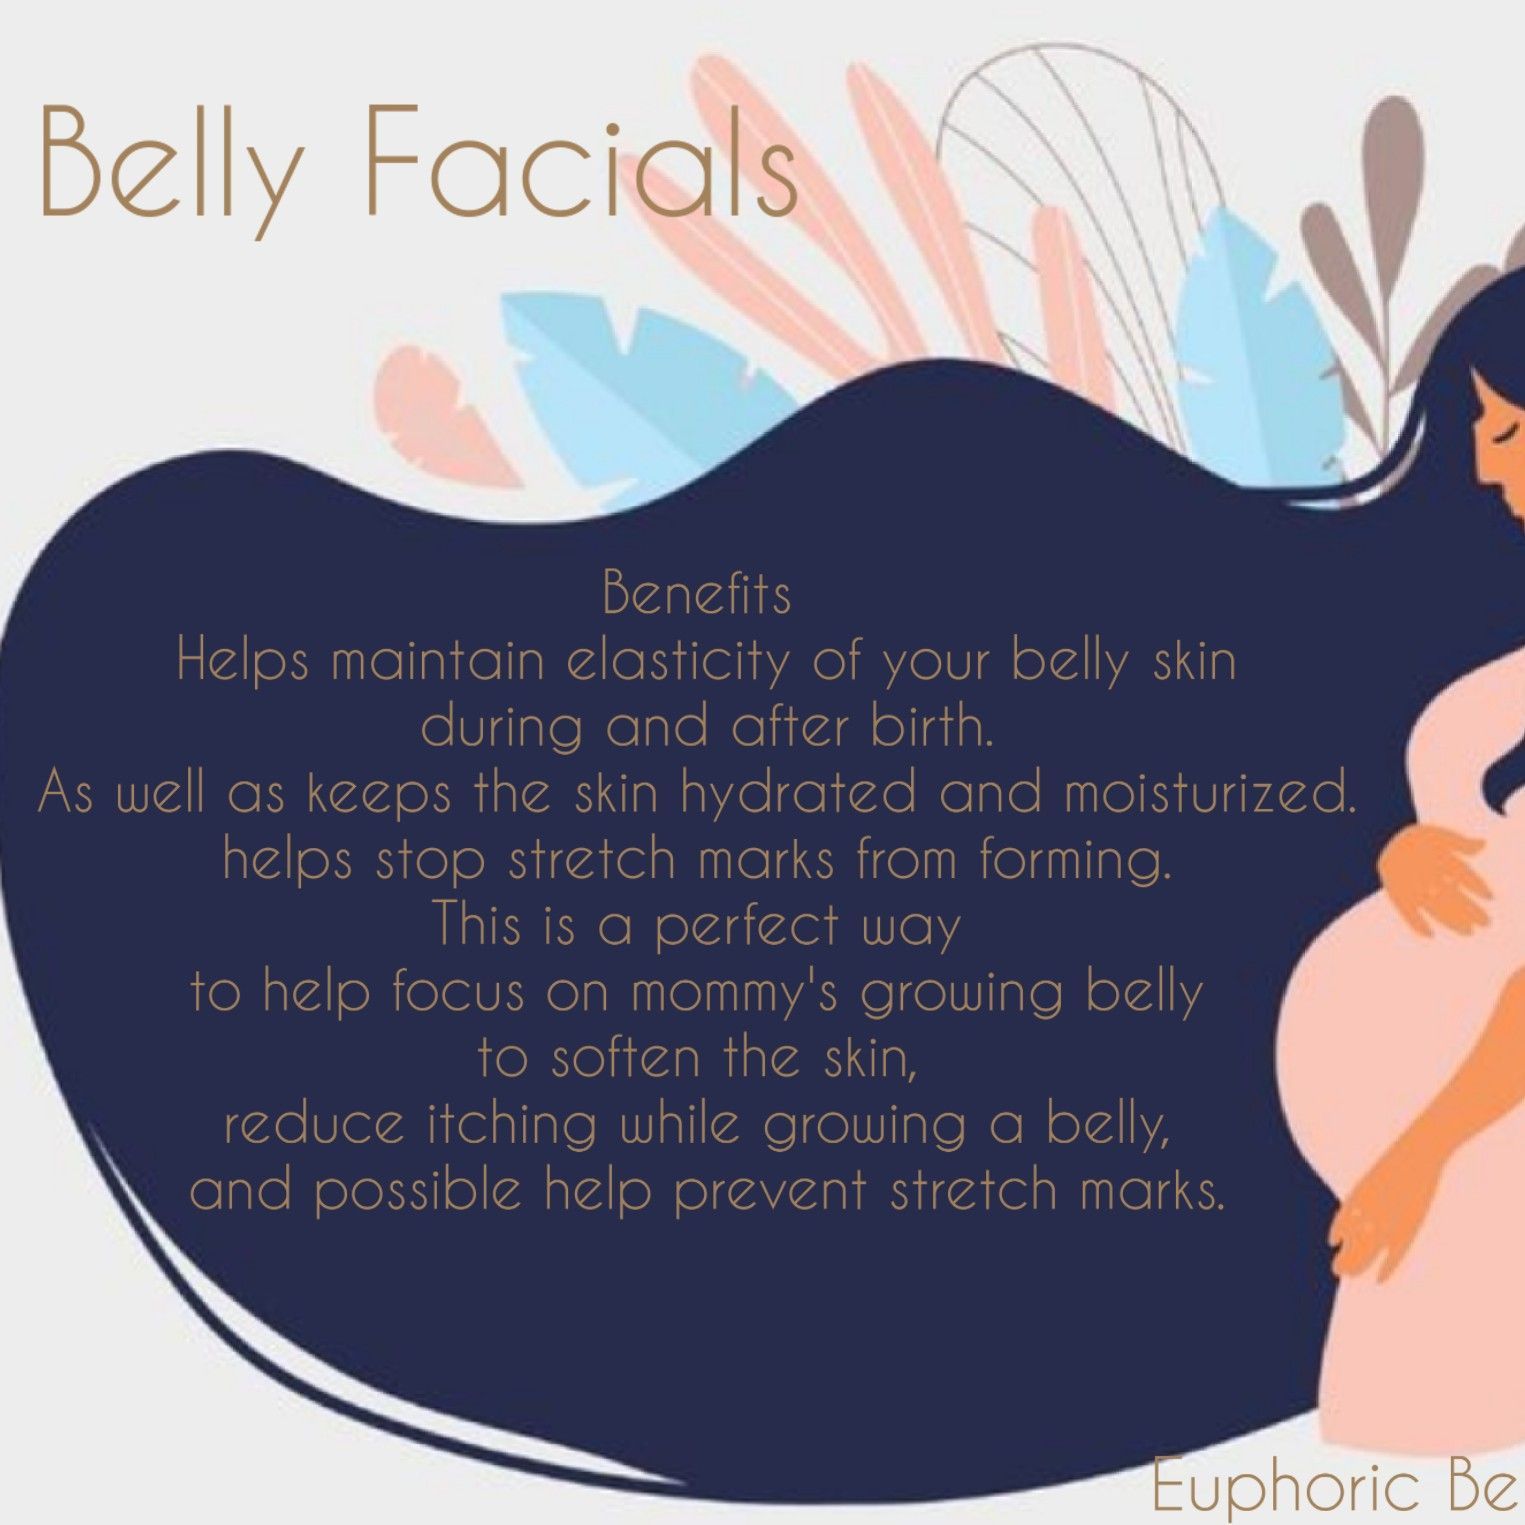 Mommy Belly Facial portfolio